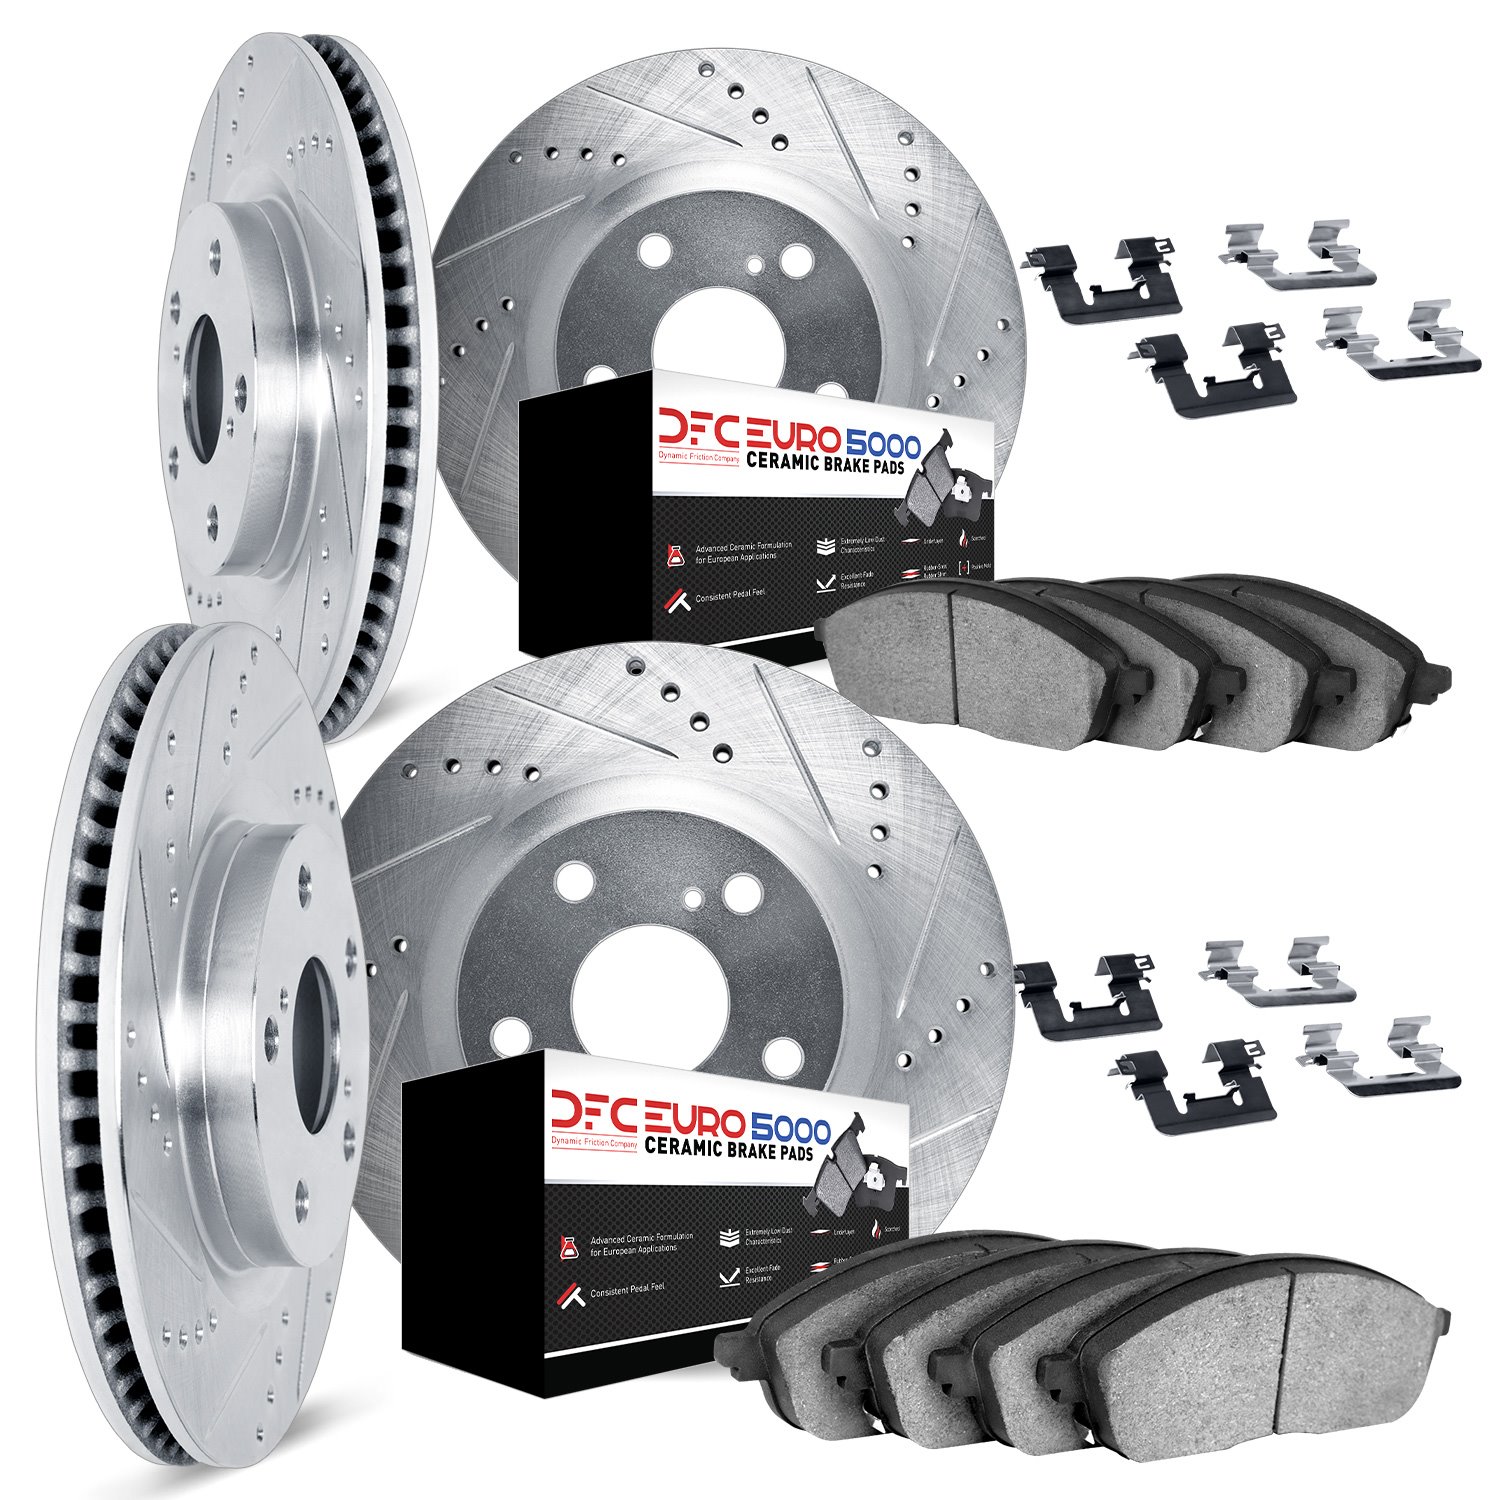 7614-20007 Drilled/Slotted Brake Rotors w/5000 Euro Ceramic Brake Pads Kit & Hardware [Silver], 2017-2020 Multiple Makes/Models,